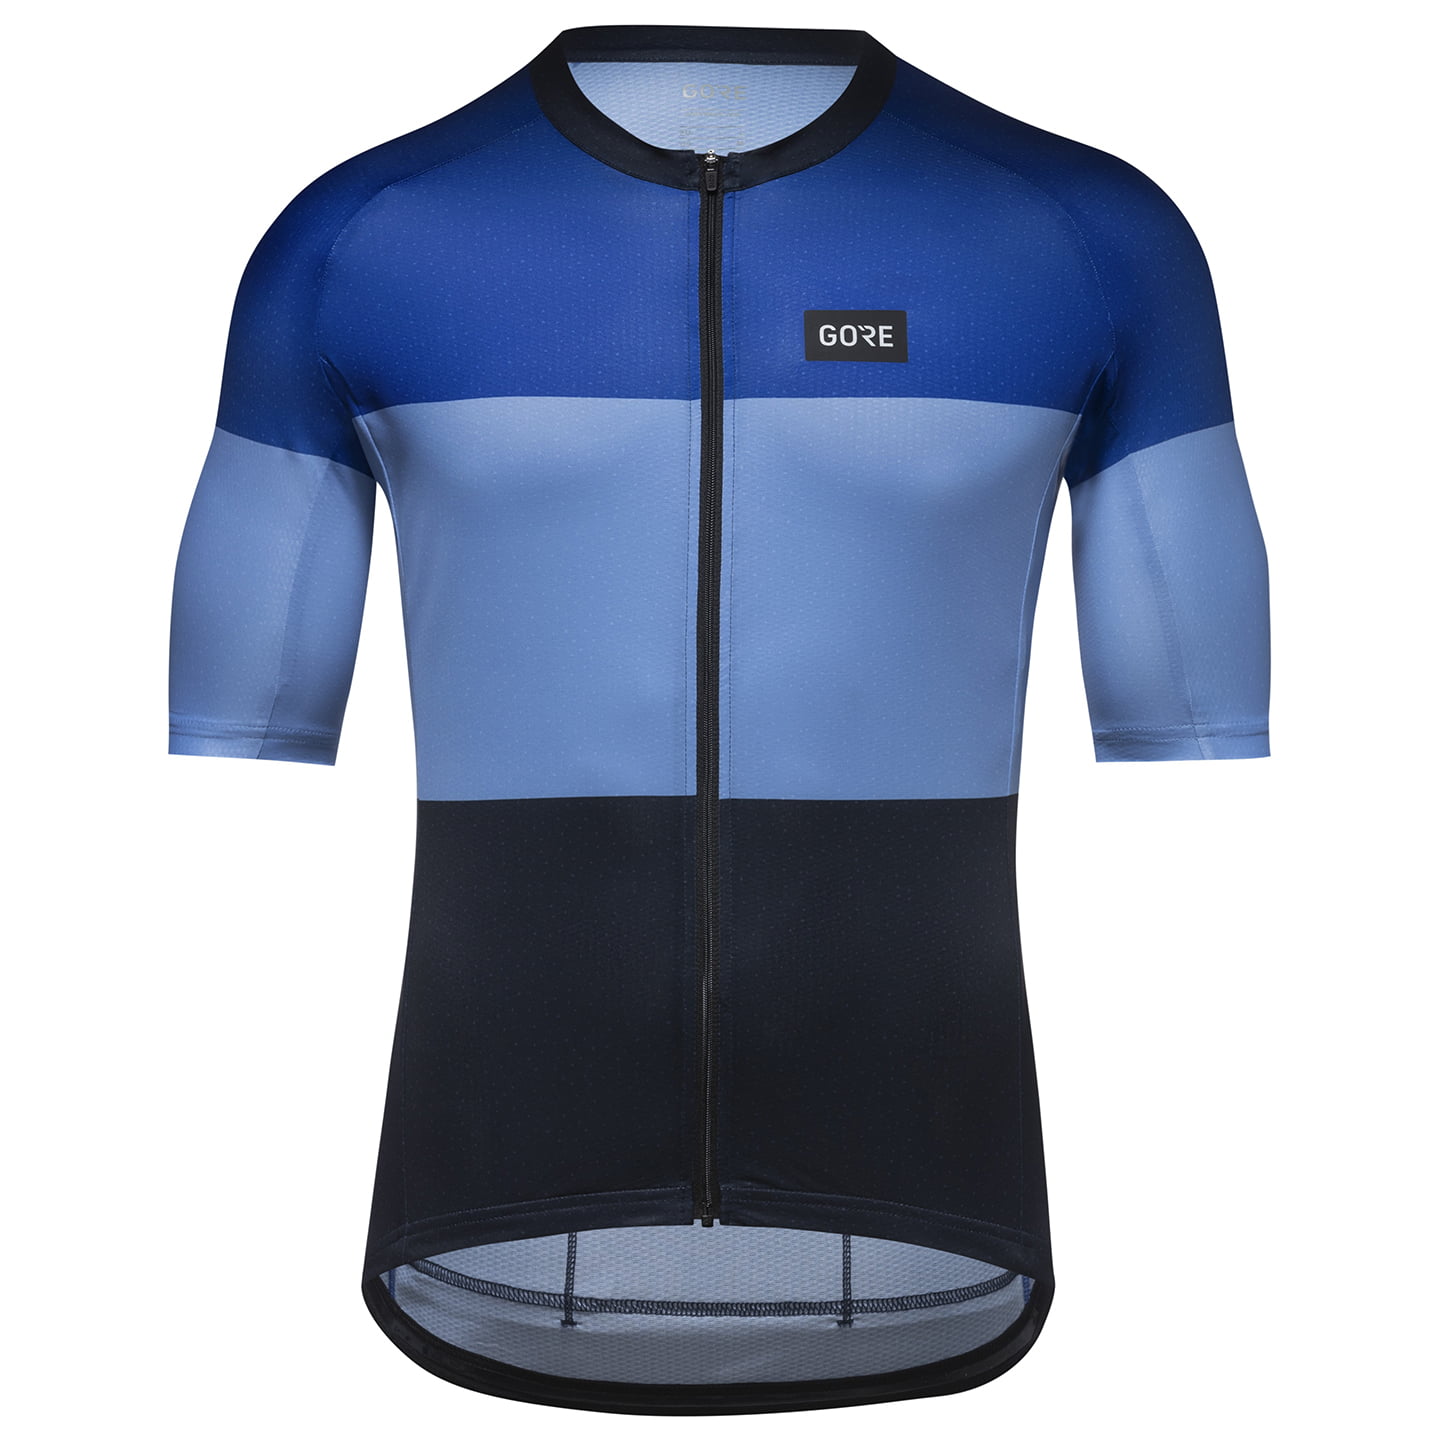 Spirit Stripes Short Sleeve Jersey Short Sleeve Jersey, for men, size S, Cycling jersey, Cycling clothing